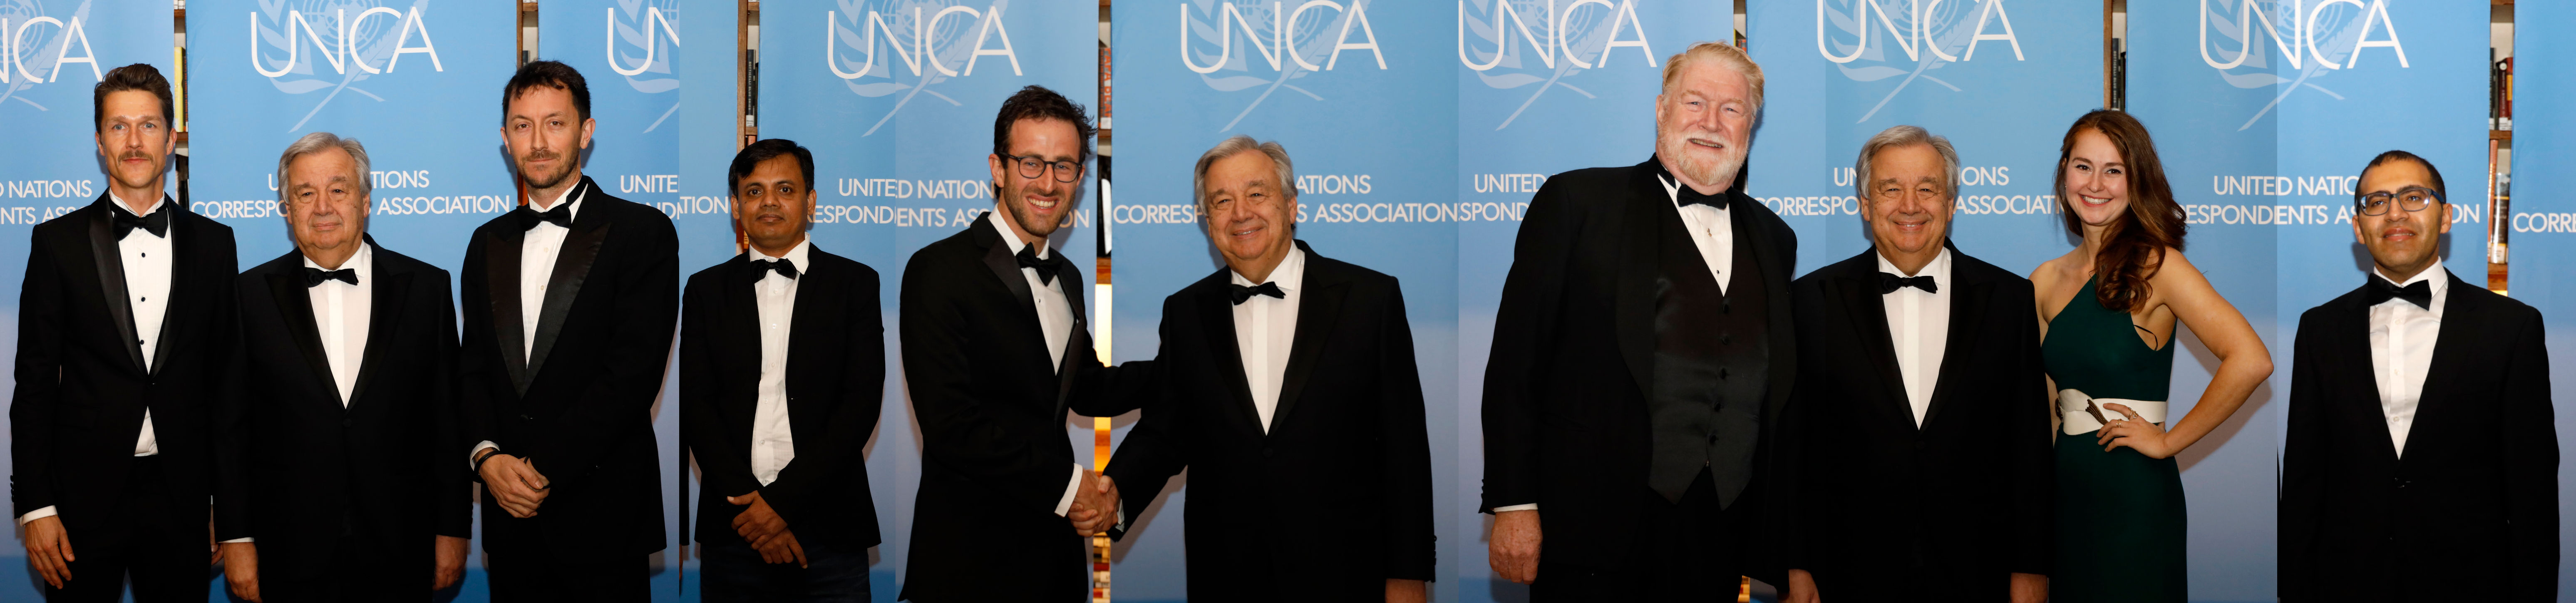 2017 UNCA Award Winners Collage